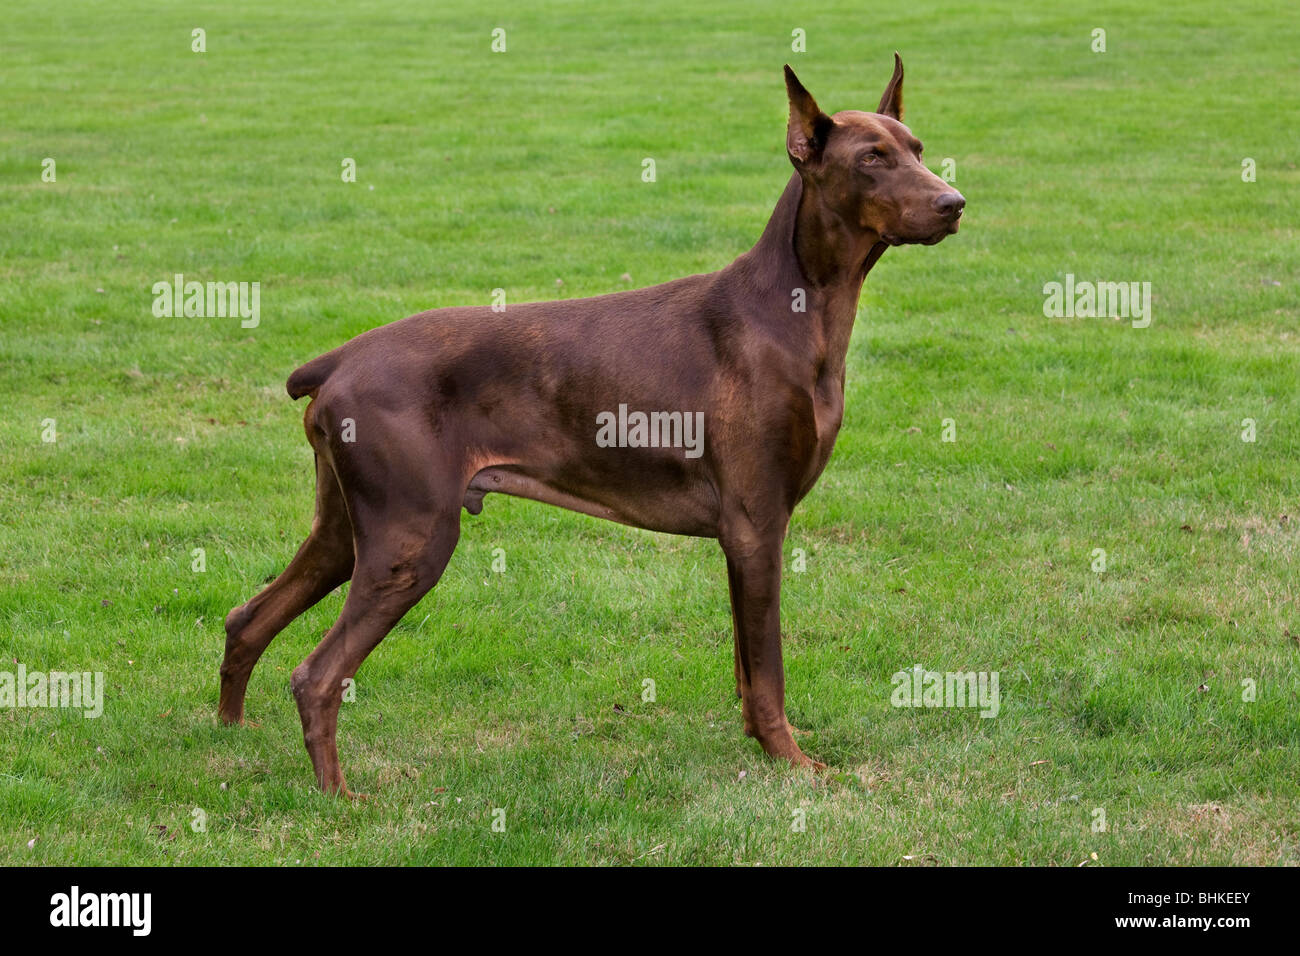 Doberman Pinscher / Pincher / Dobermann (Canis lupus familiaris) in garden Stock Photo